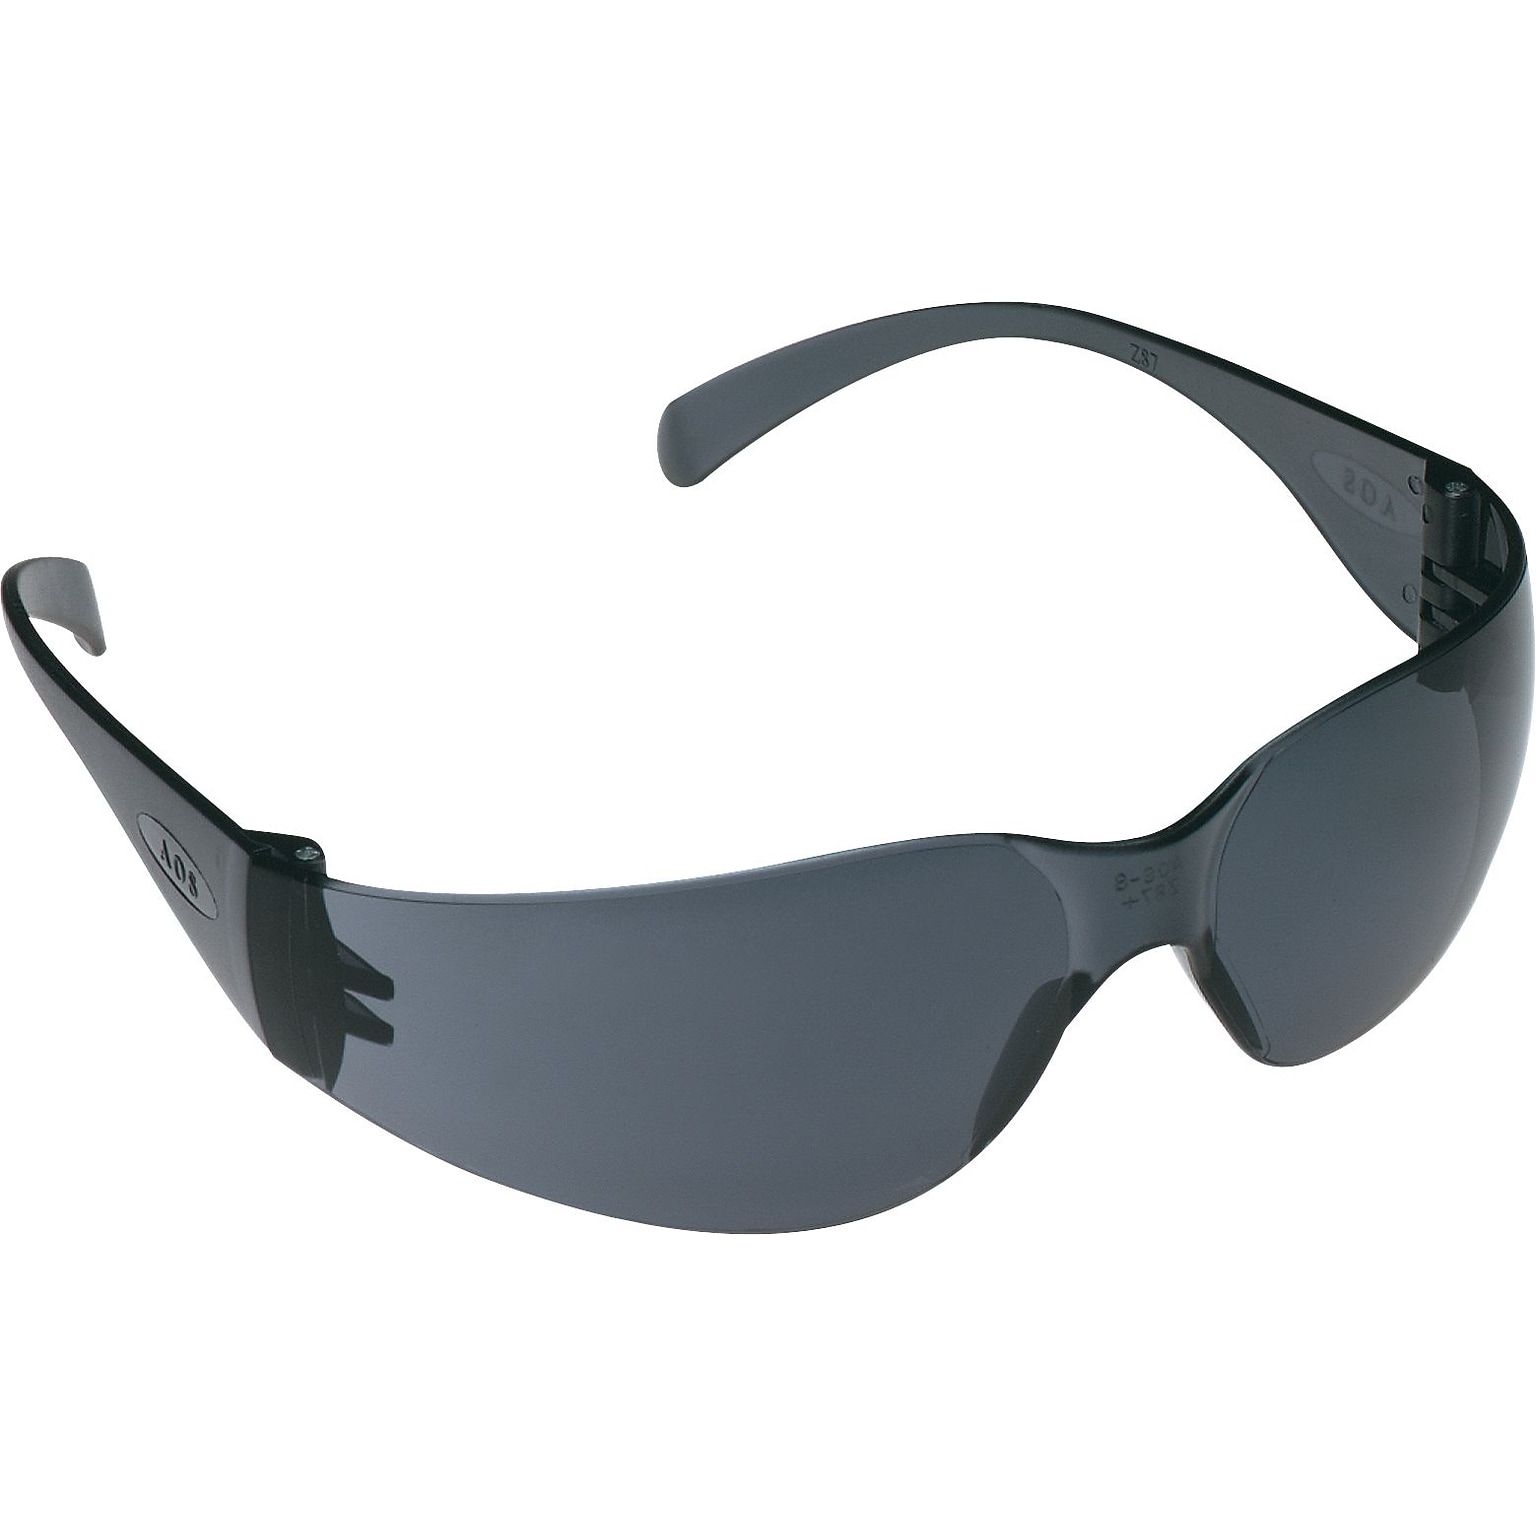 3M™ Virtua™ Safety Eyewear, Gray Temple, Gray Lens, Anti-Fog Coat Shade